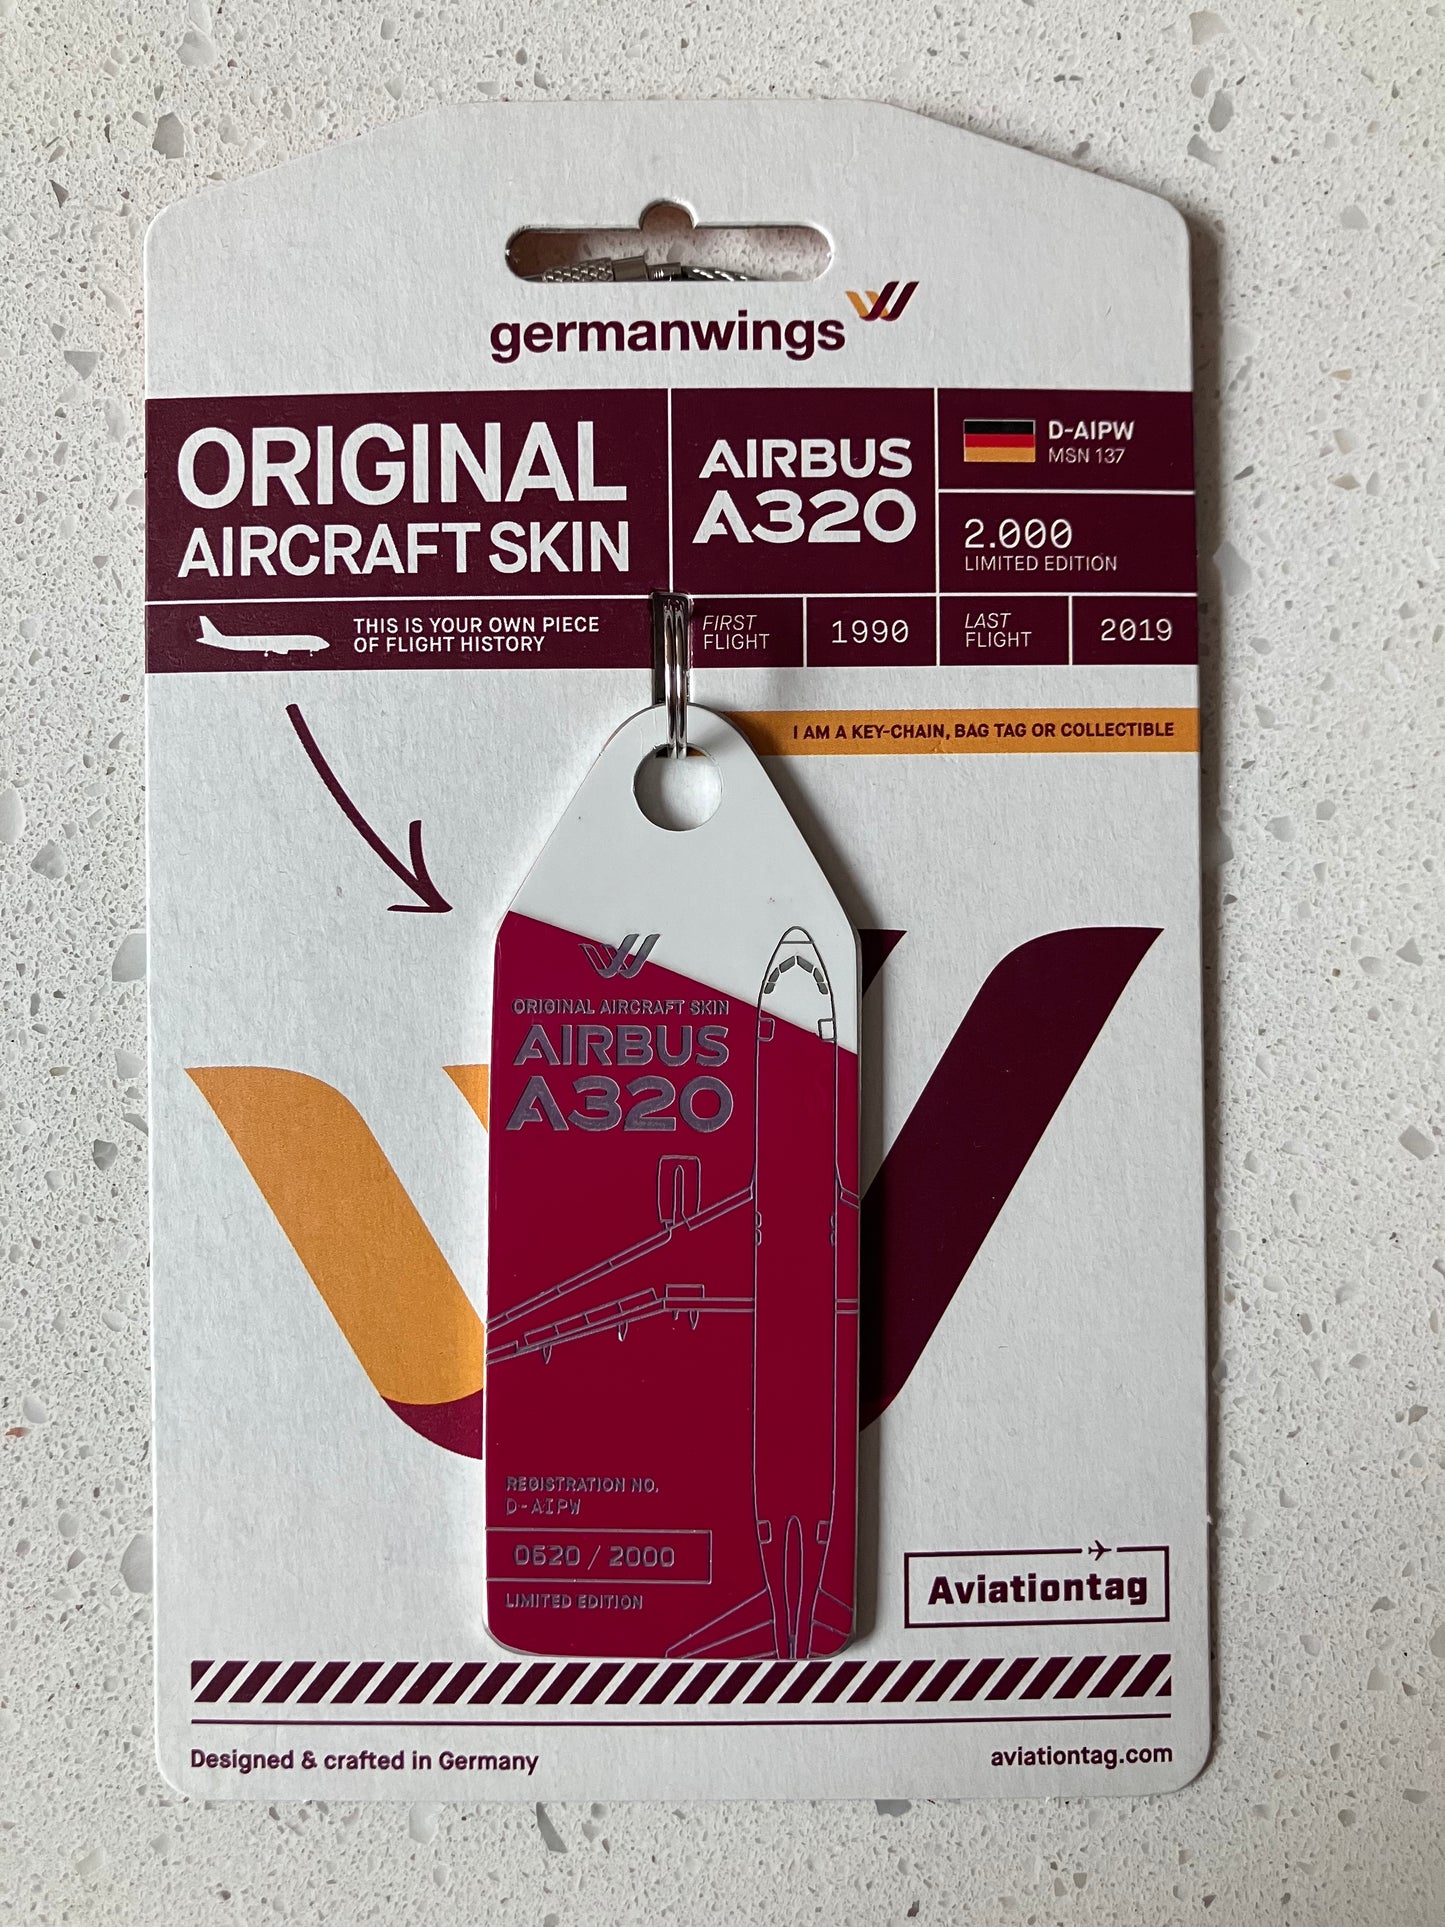 Germanwings Airbus A320 – D-AIPW Bi-Colour